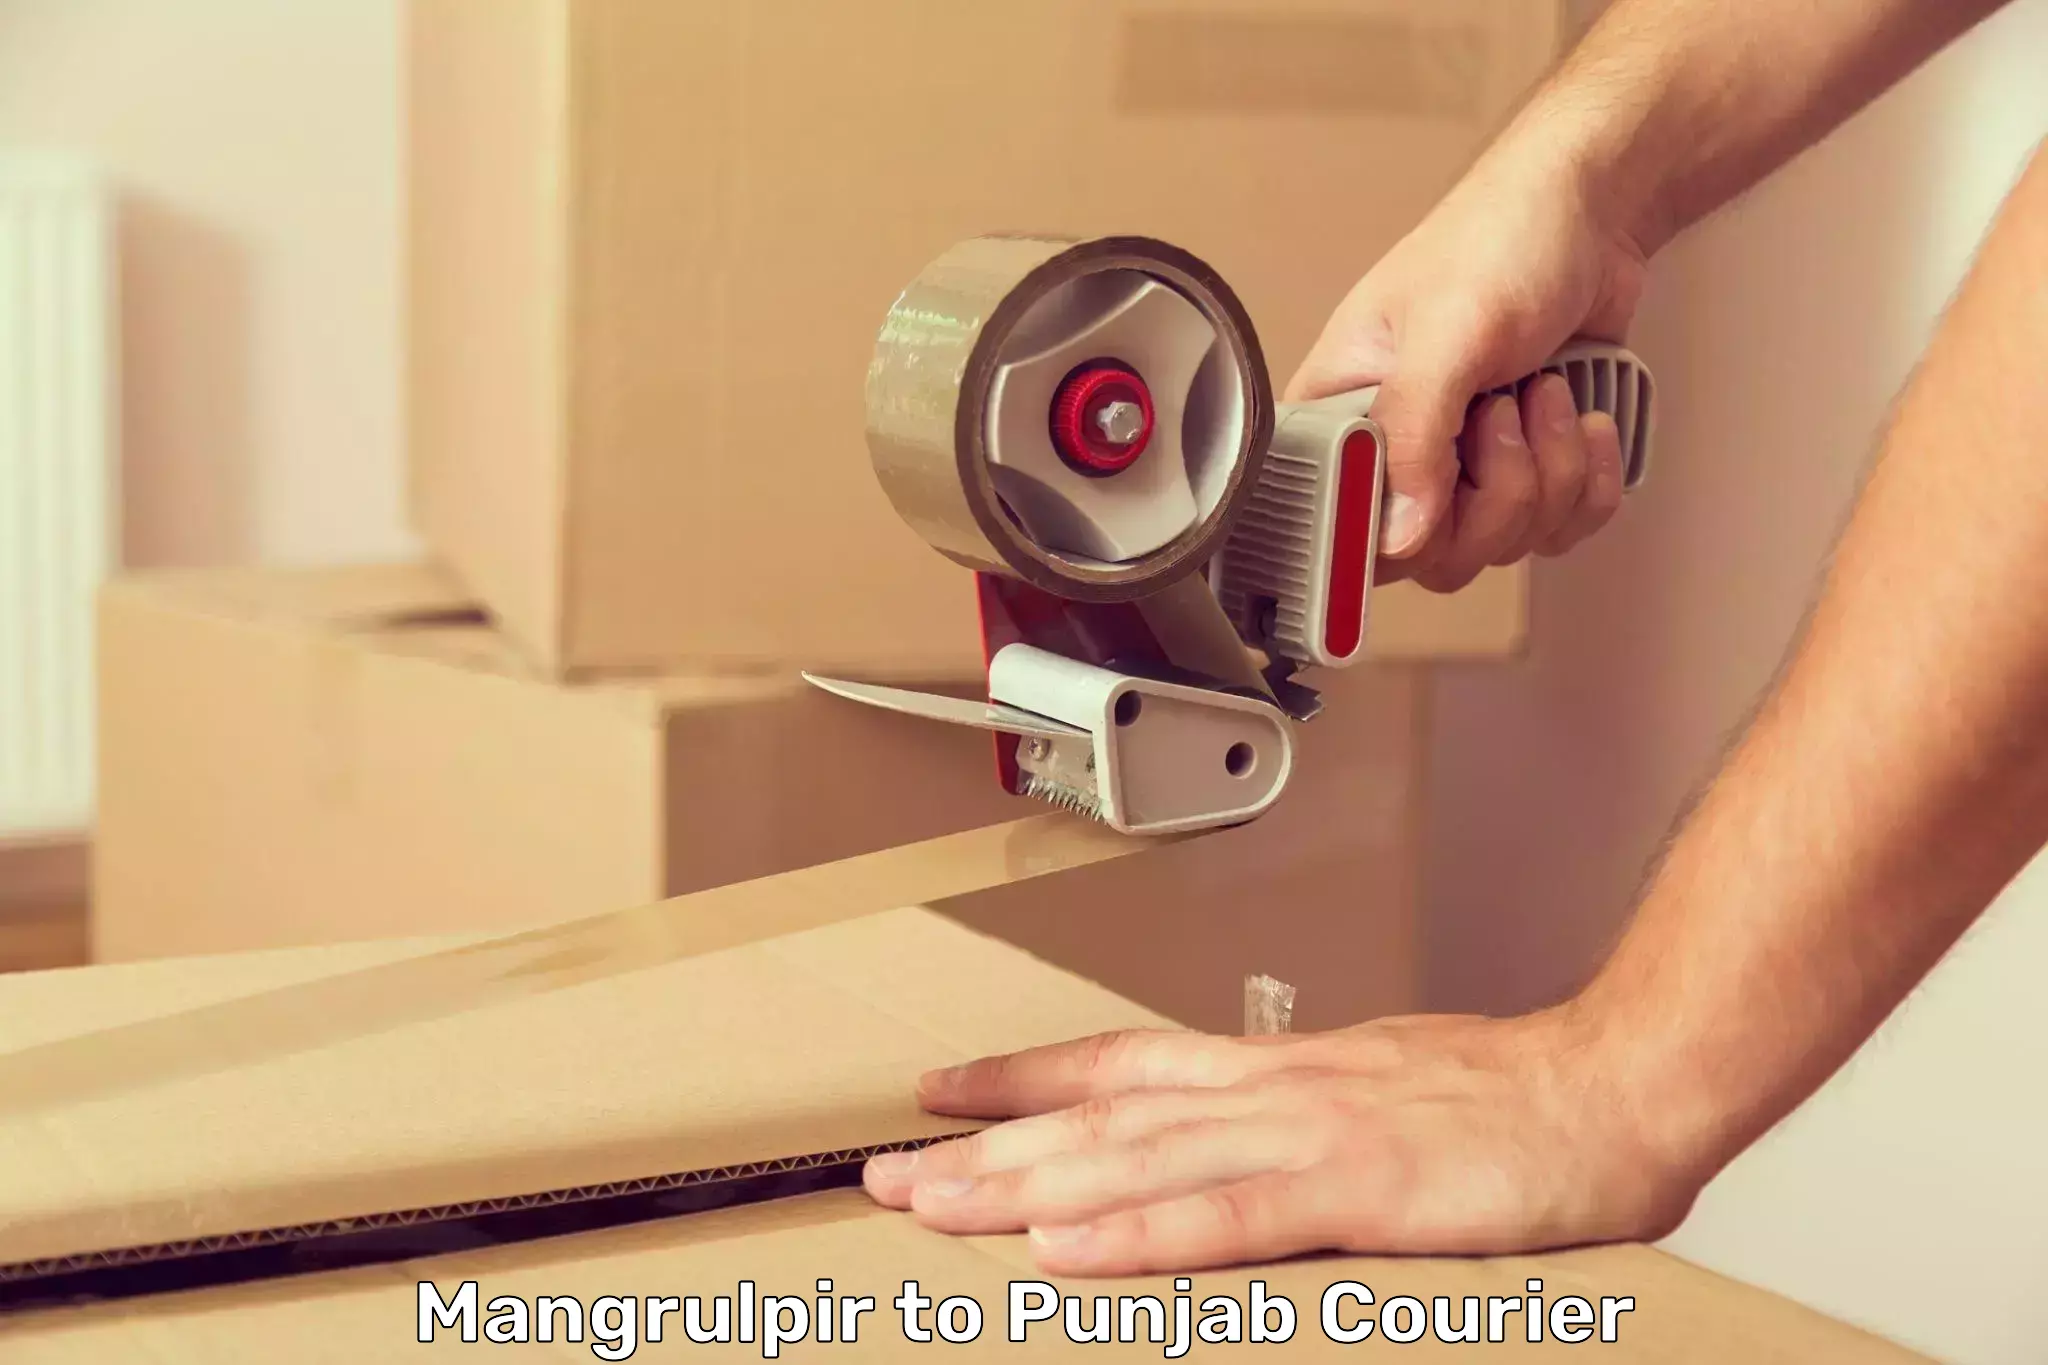 Courier service comparison Mangrulpir to Rajpura